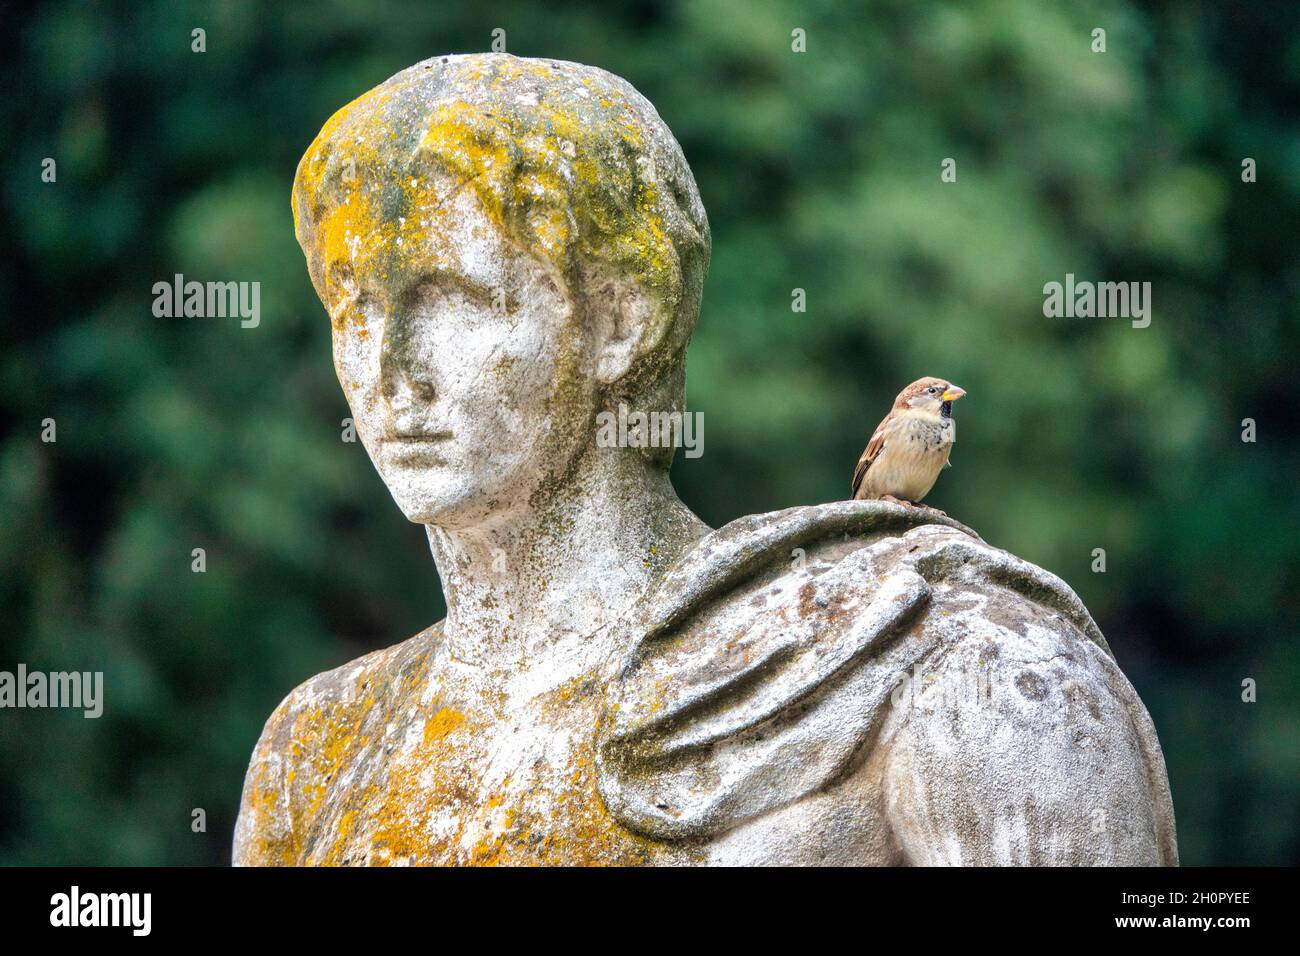 Eurasian tree sparrow (Passer montanus) in the garden of the Galleria Borghese, Rome Italy Stock Photo